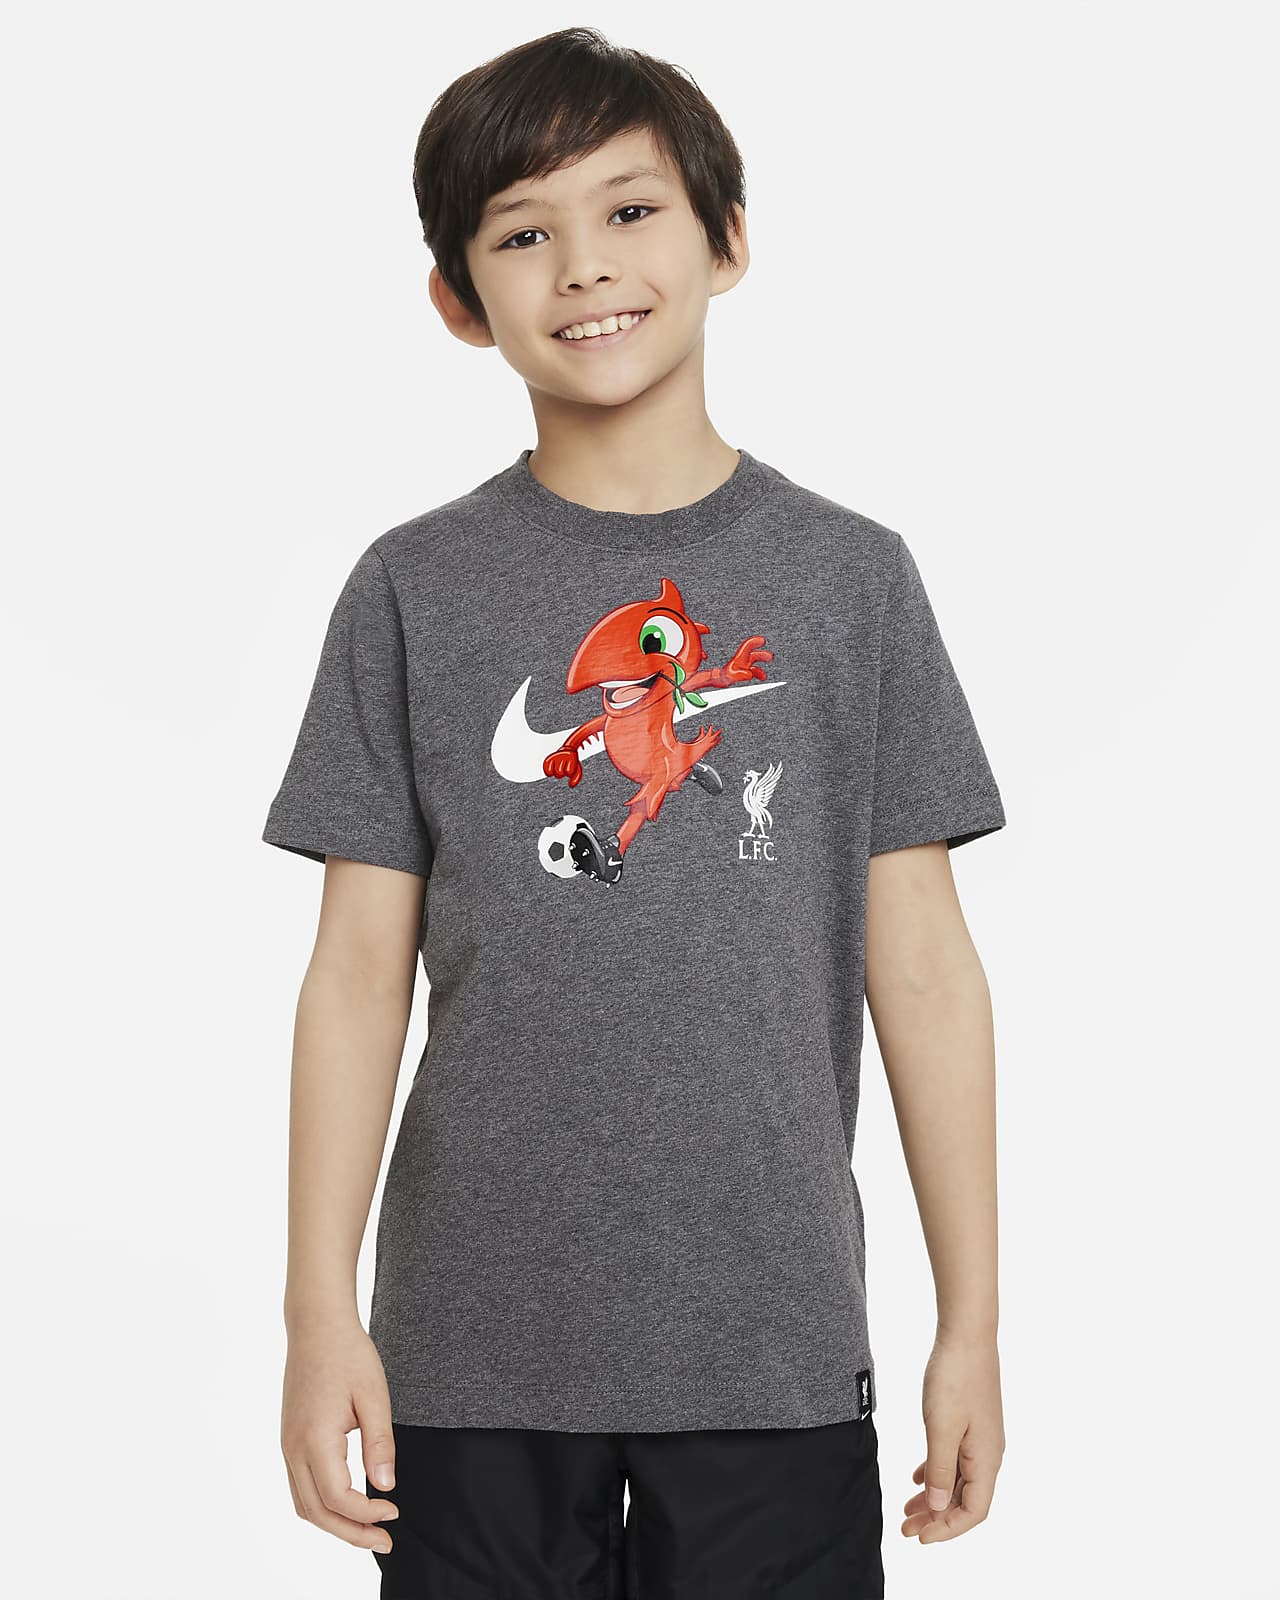 T-shirt Nike Football Liverpool FC Mascot pour ado